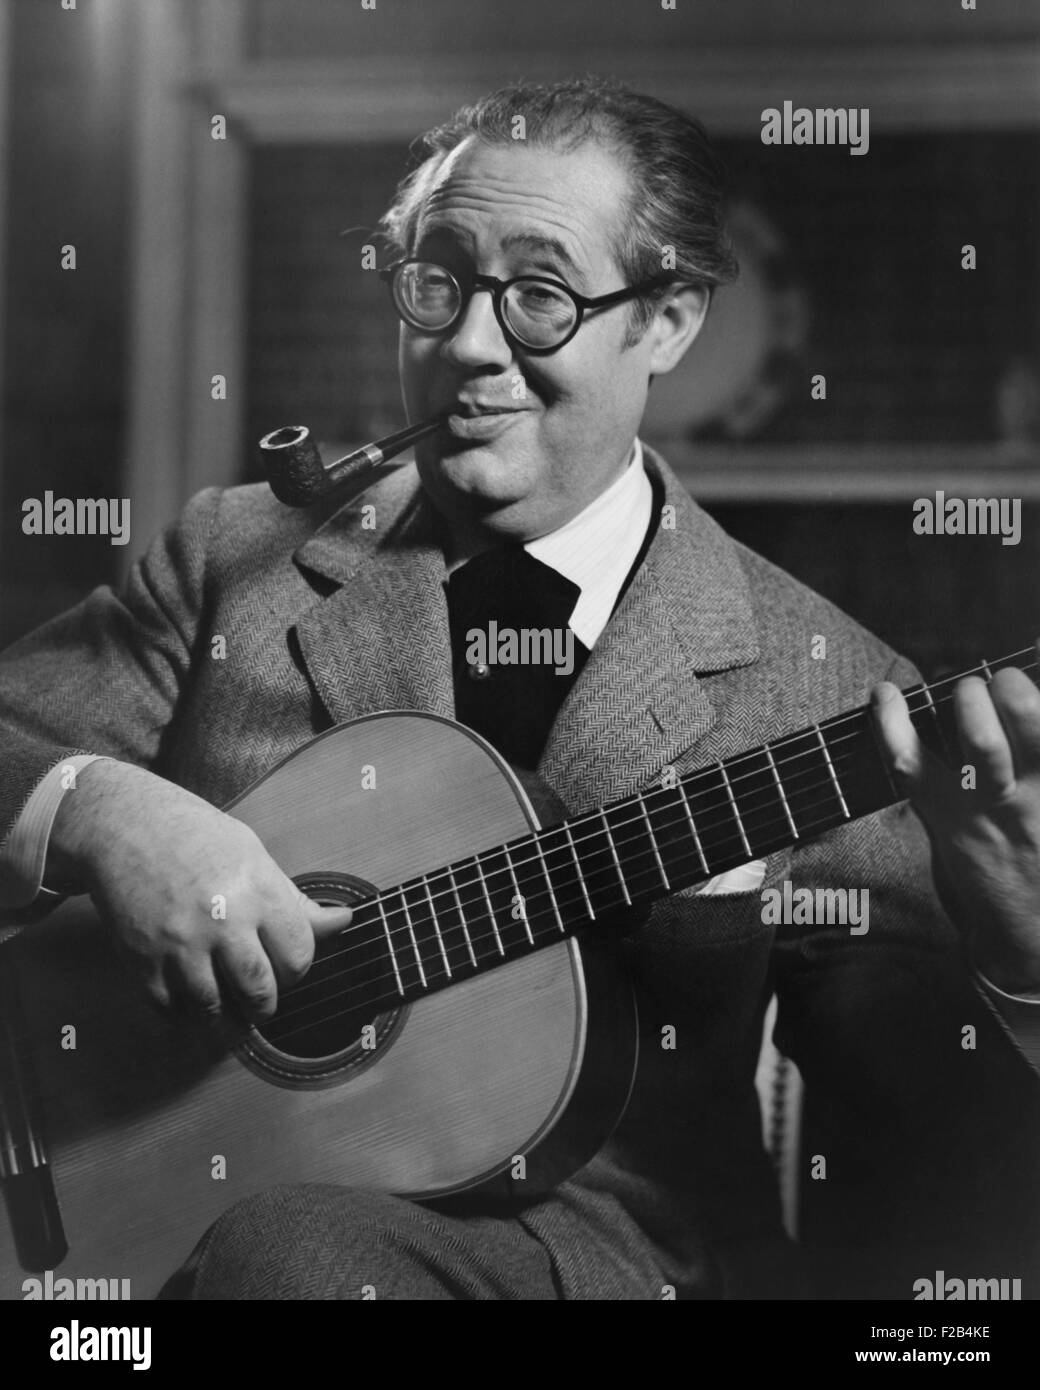 Andres Segovia, guitariste classique espagnol. 1947. Photo par Peggy Duffy. - BSLOC  2015 (1 22) Banque D'Images